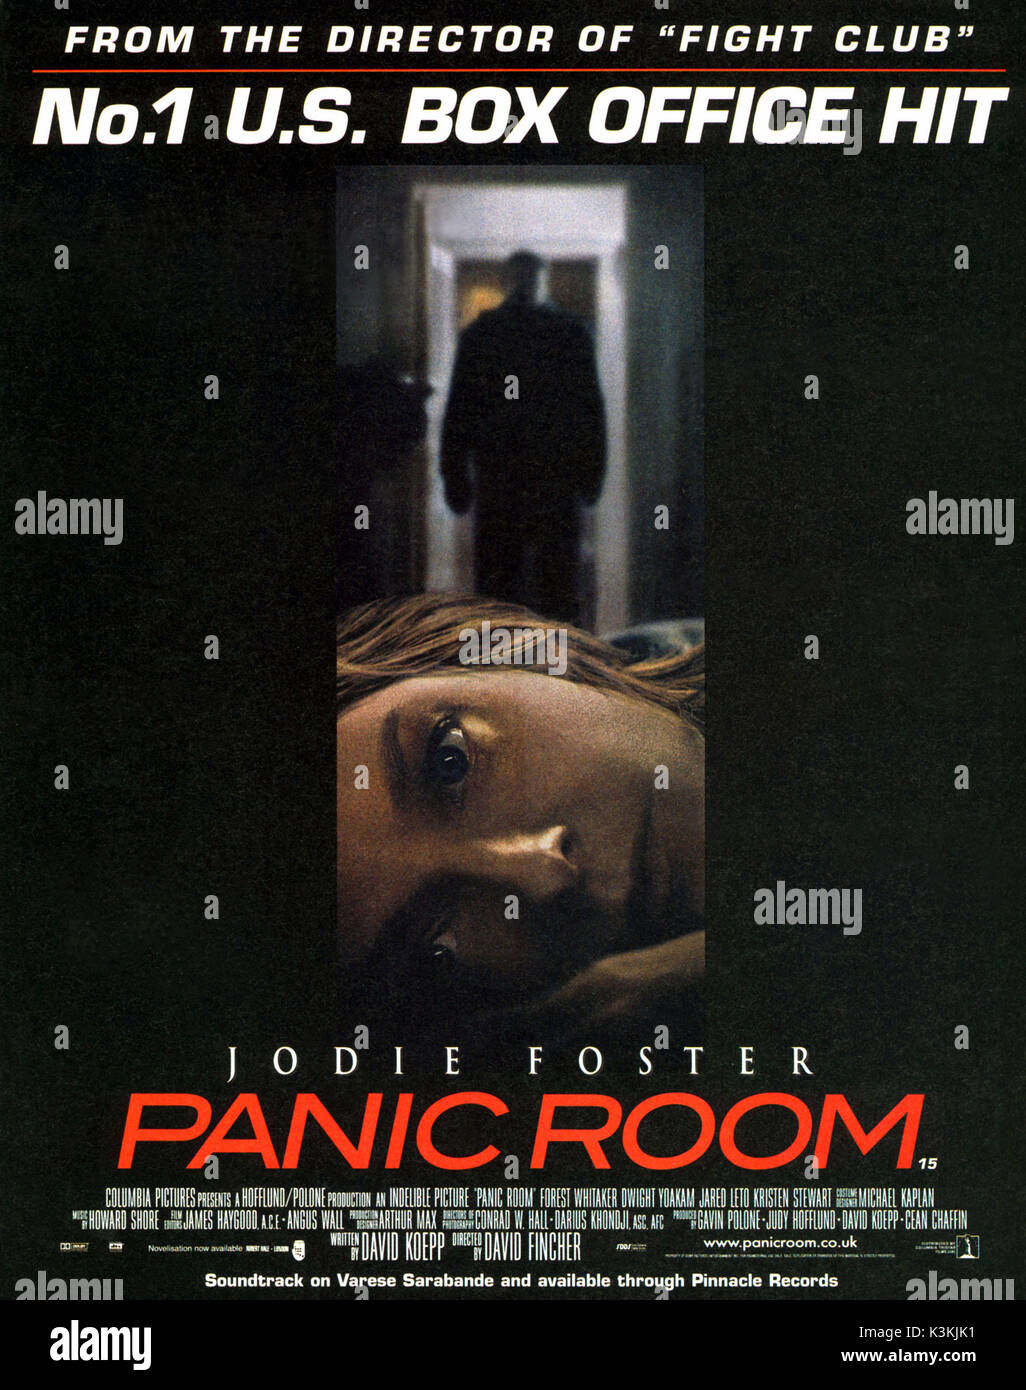 Panic Room Date 2002 Stock Photo 157169013 Alamy